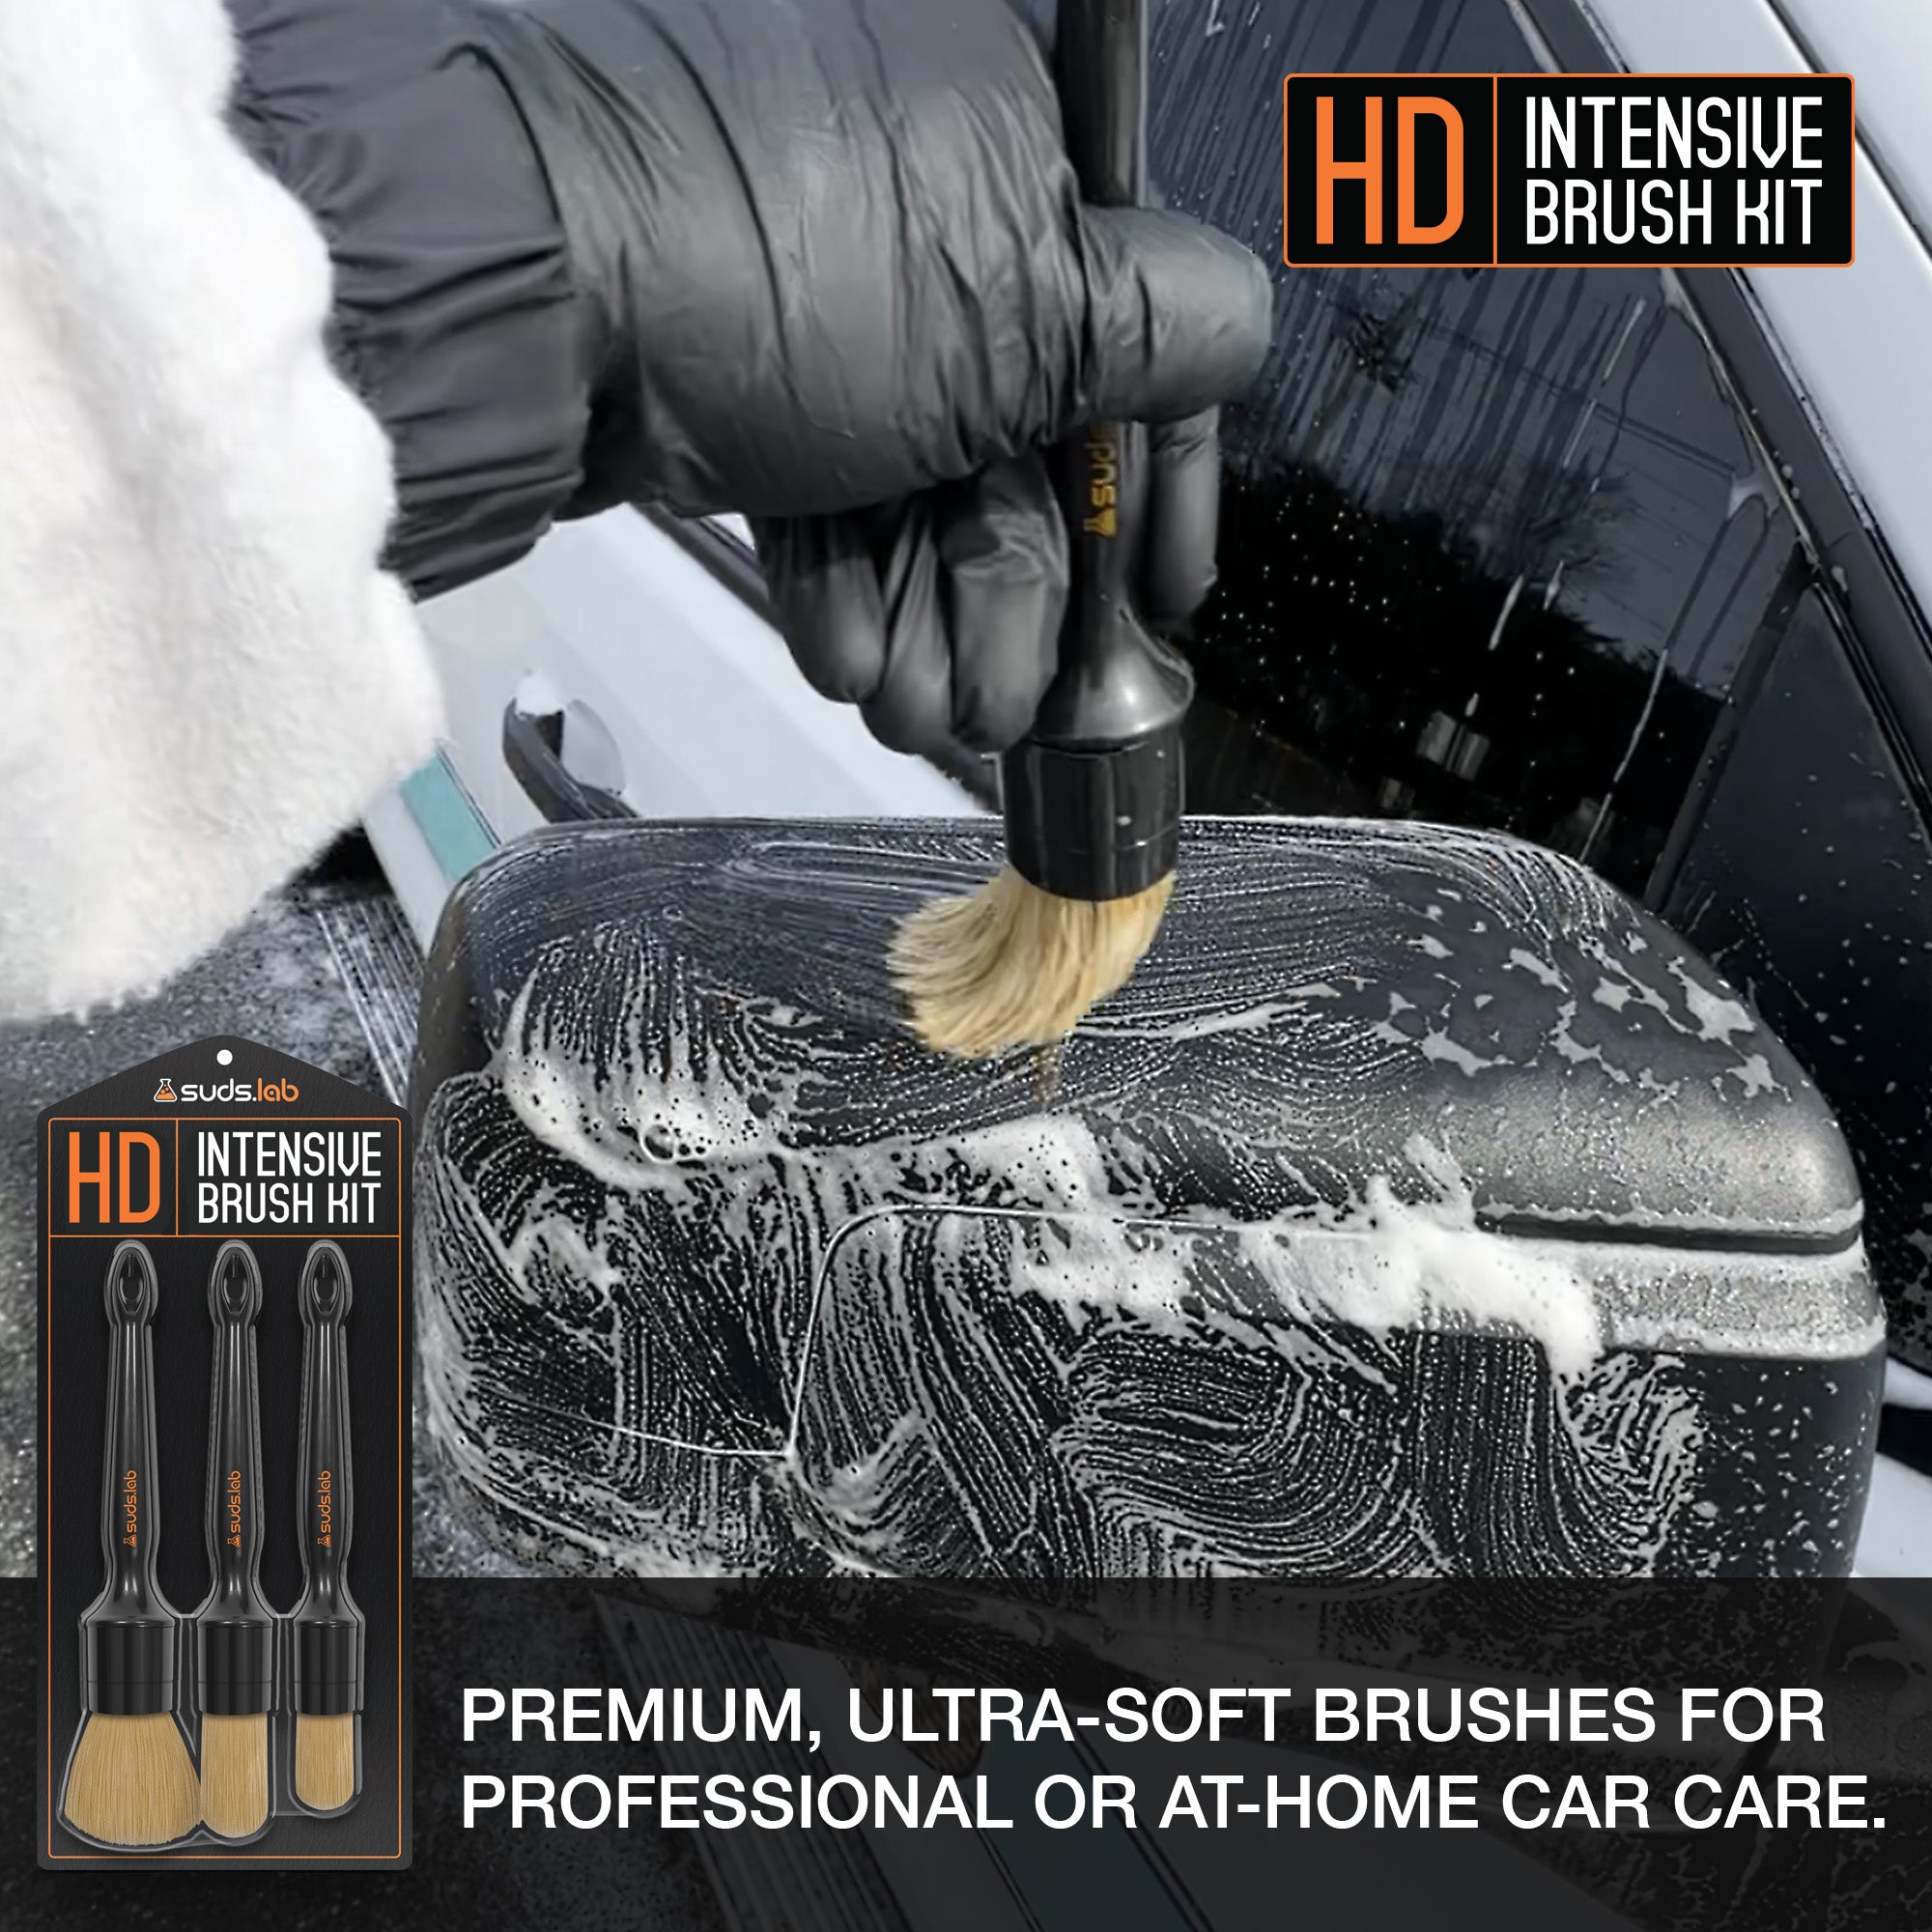 HD Intensive Brush Kit 3 Pack